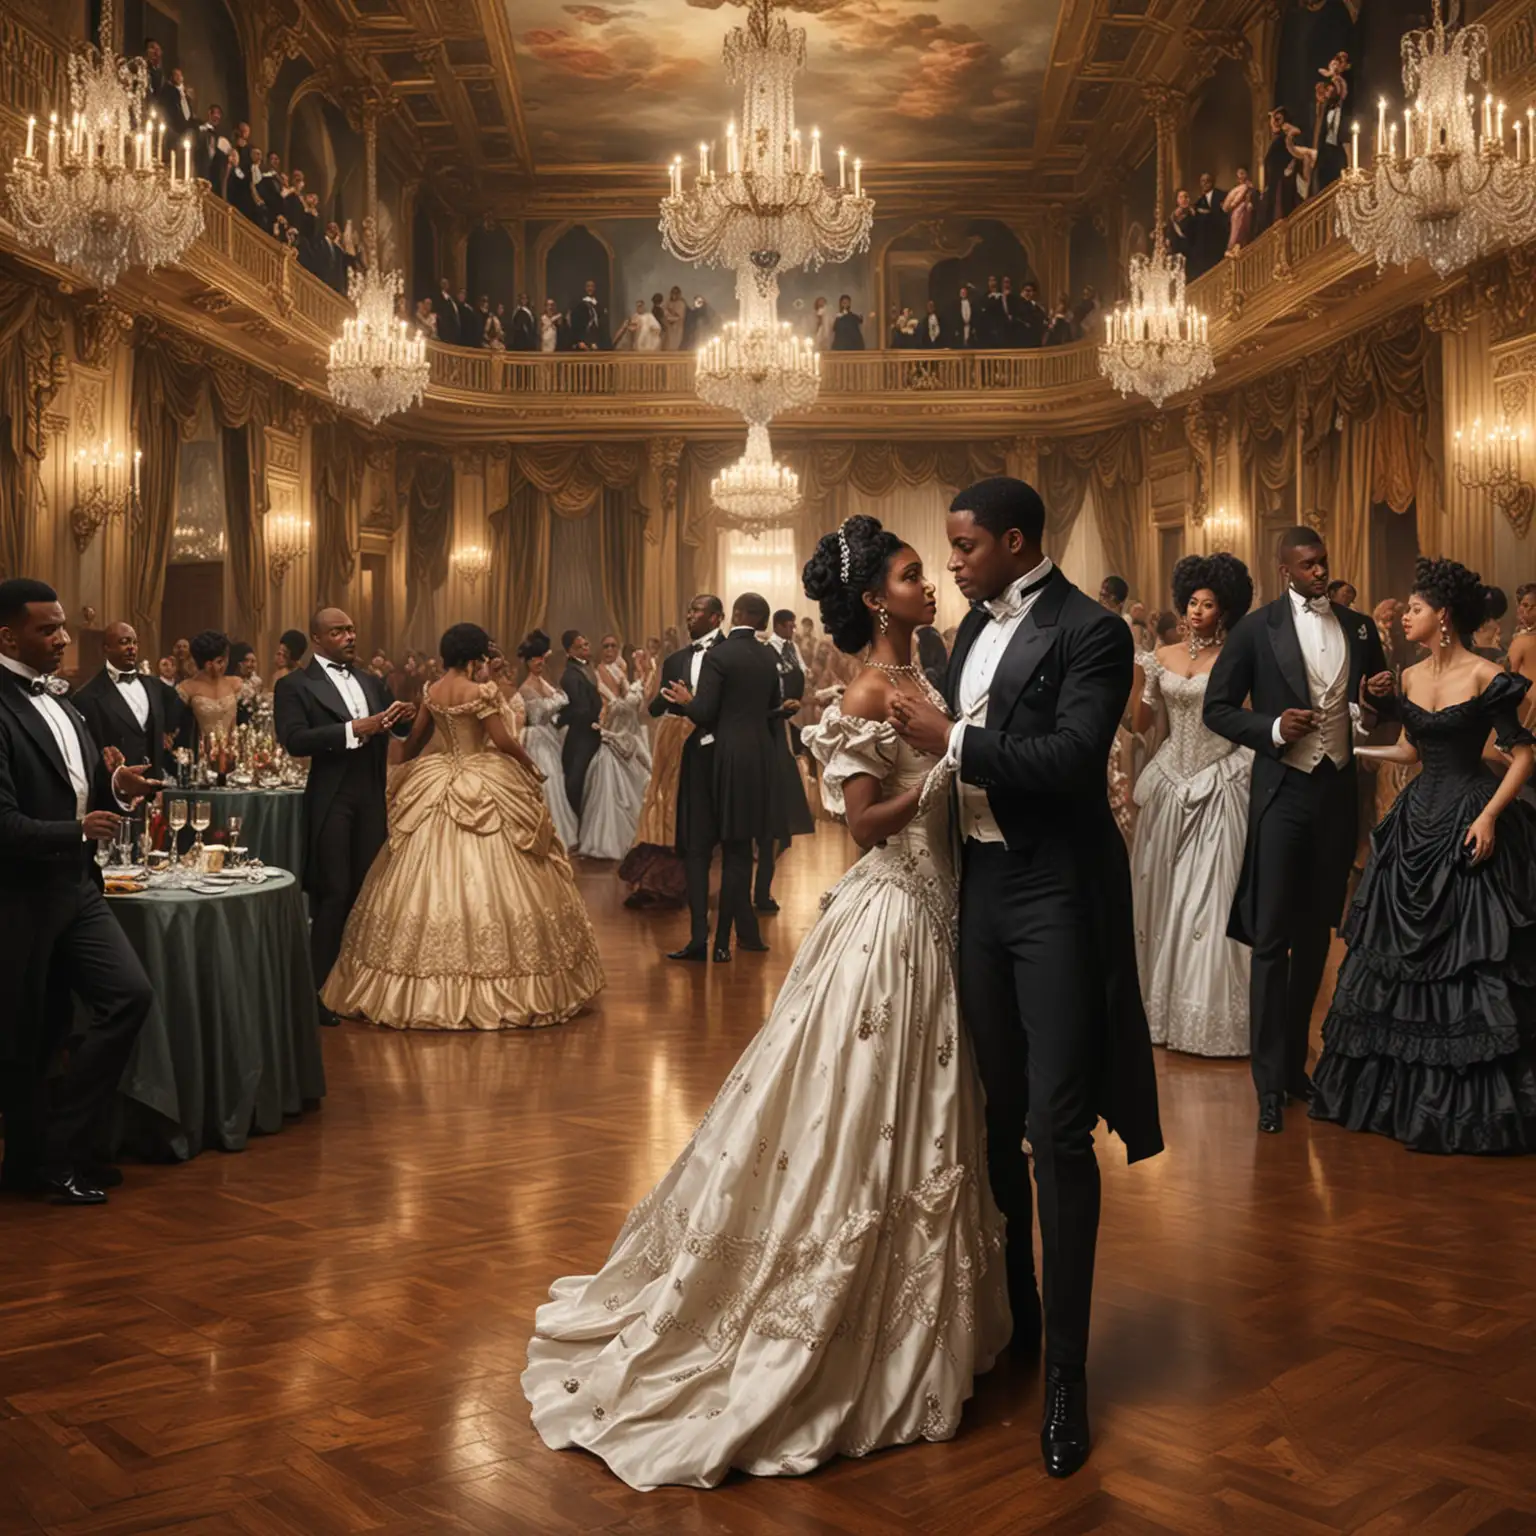 Victorian Decadent Ballroom with Black Men and Women in Glamorous Attire